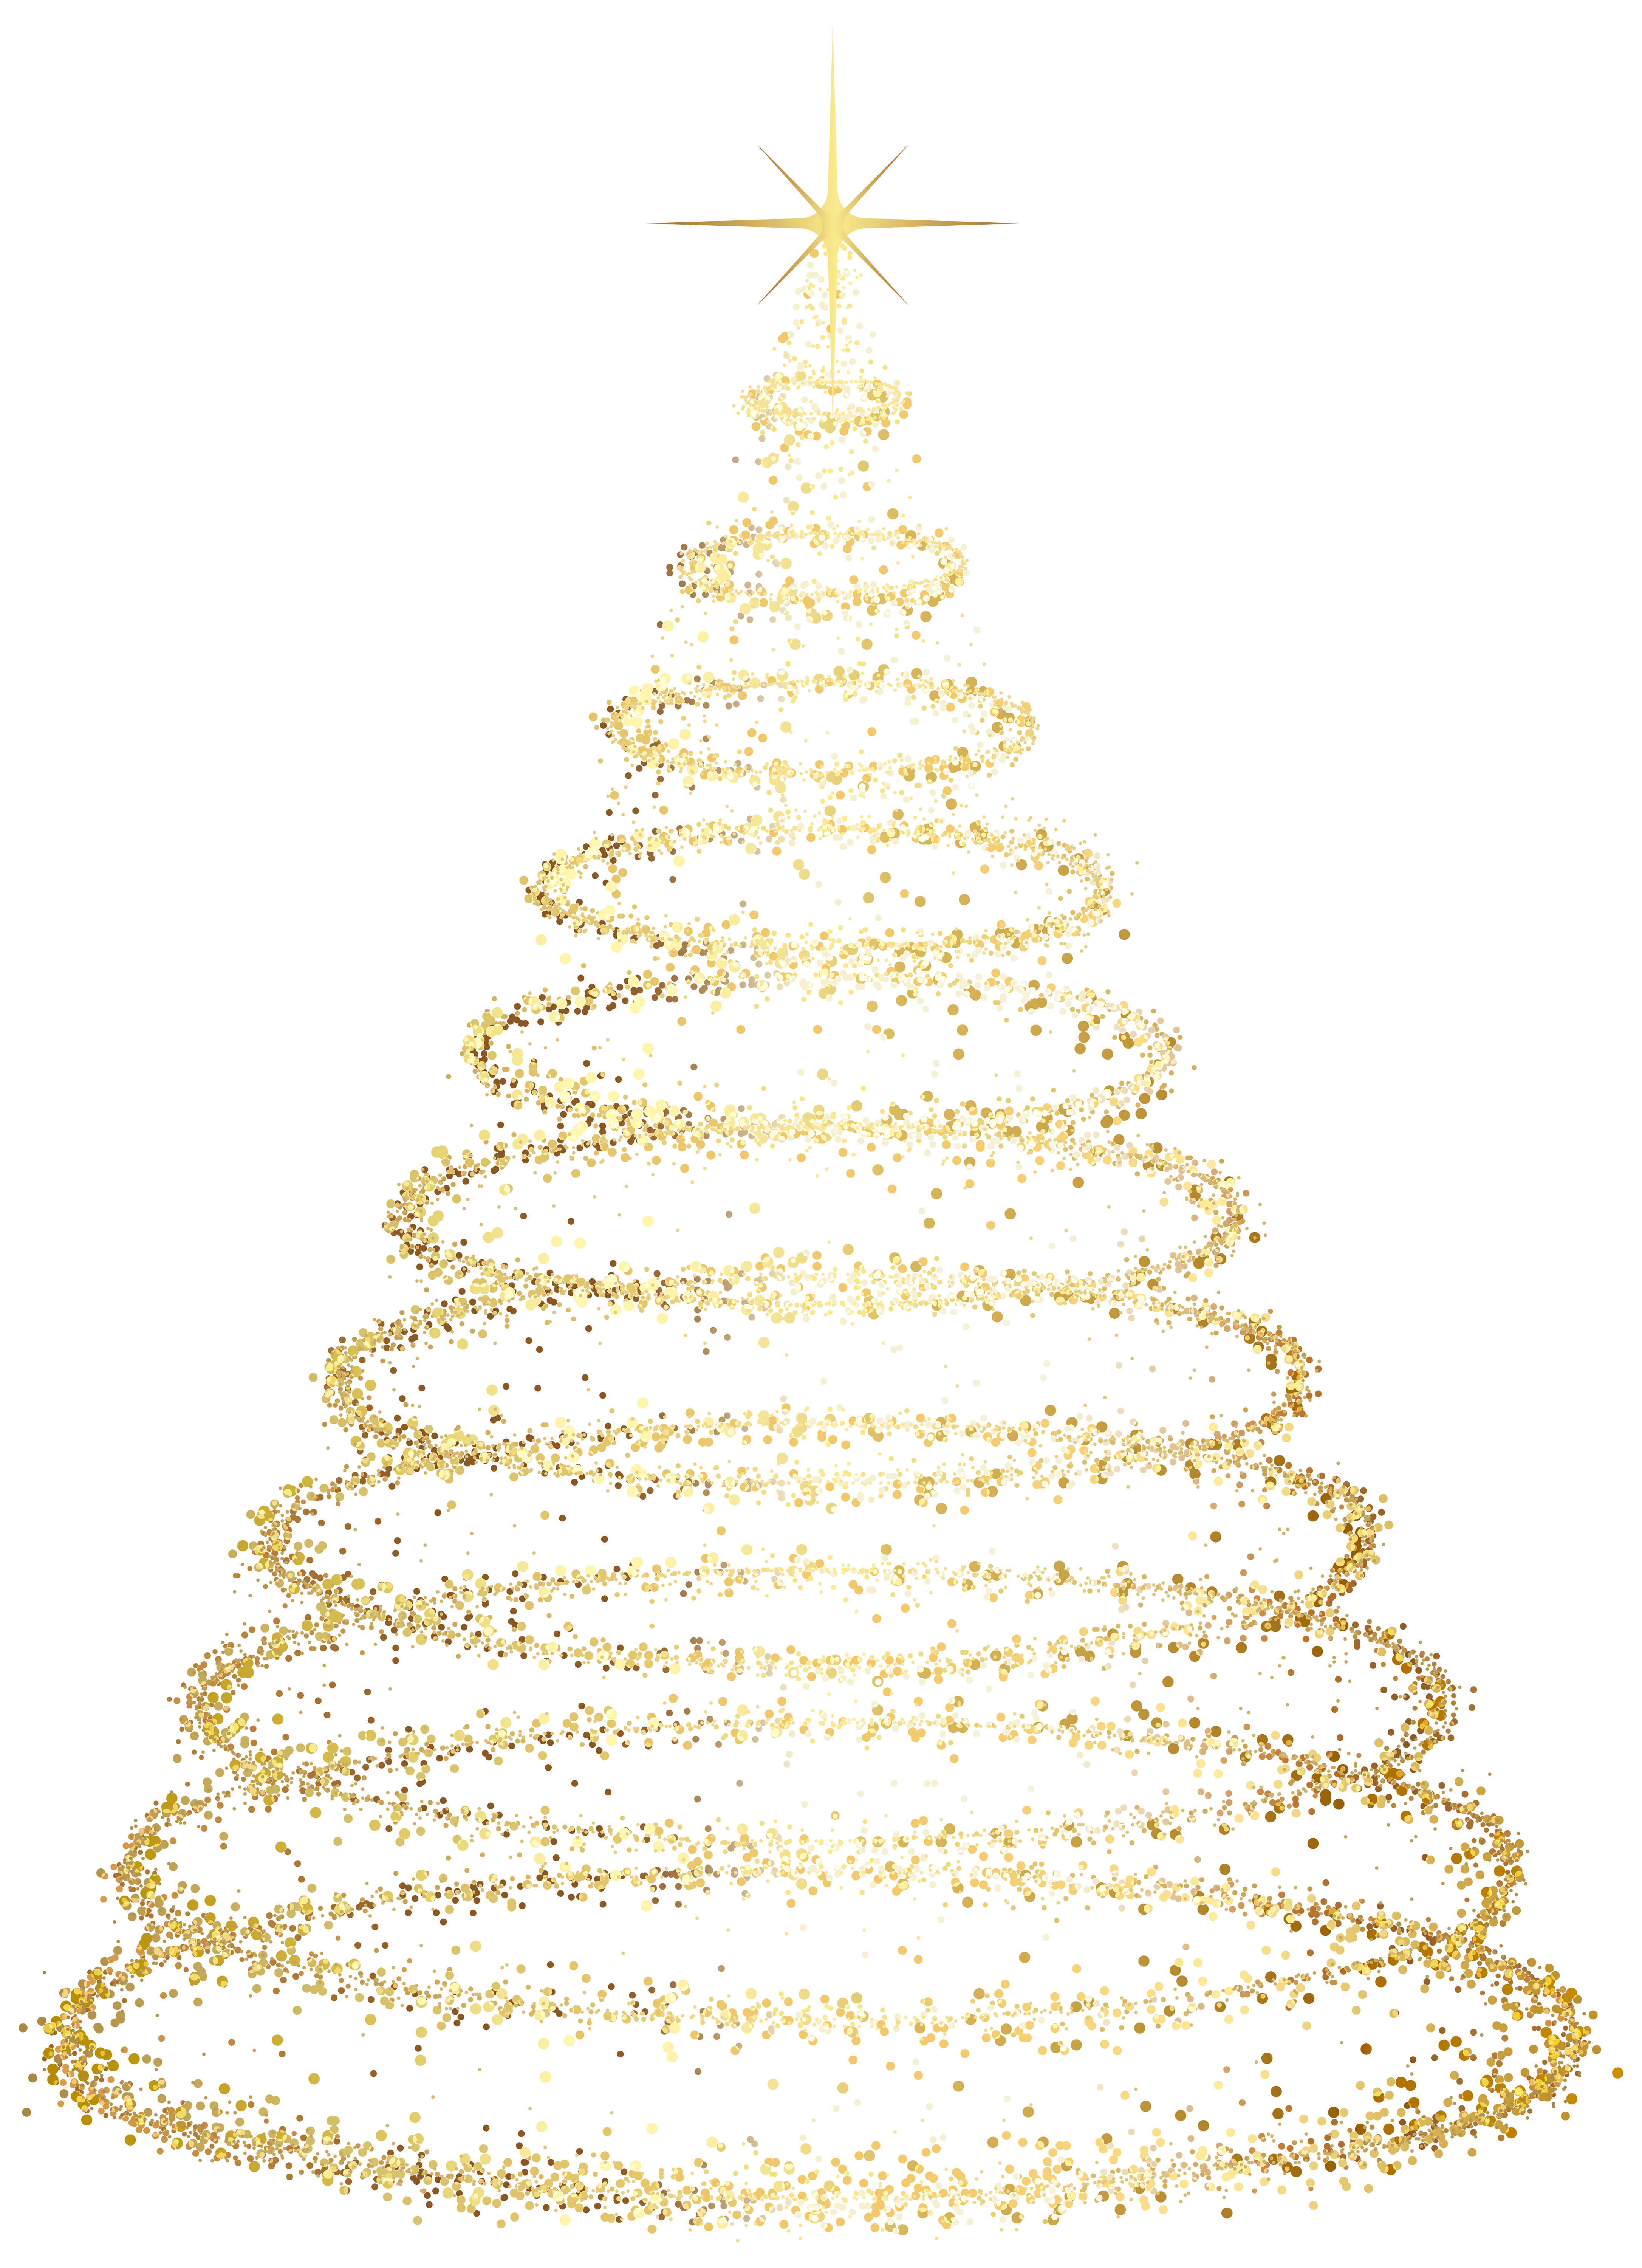 Gold Deco Christmas Tree Transparent Clip Art Image